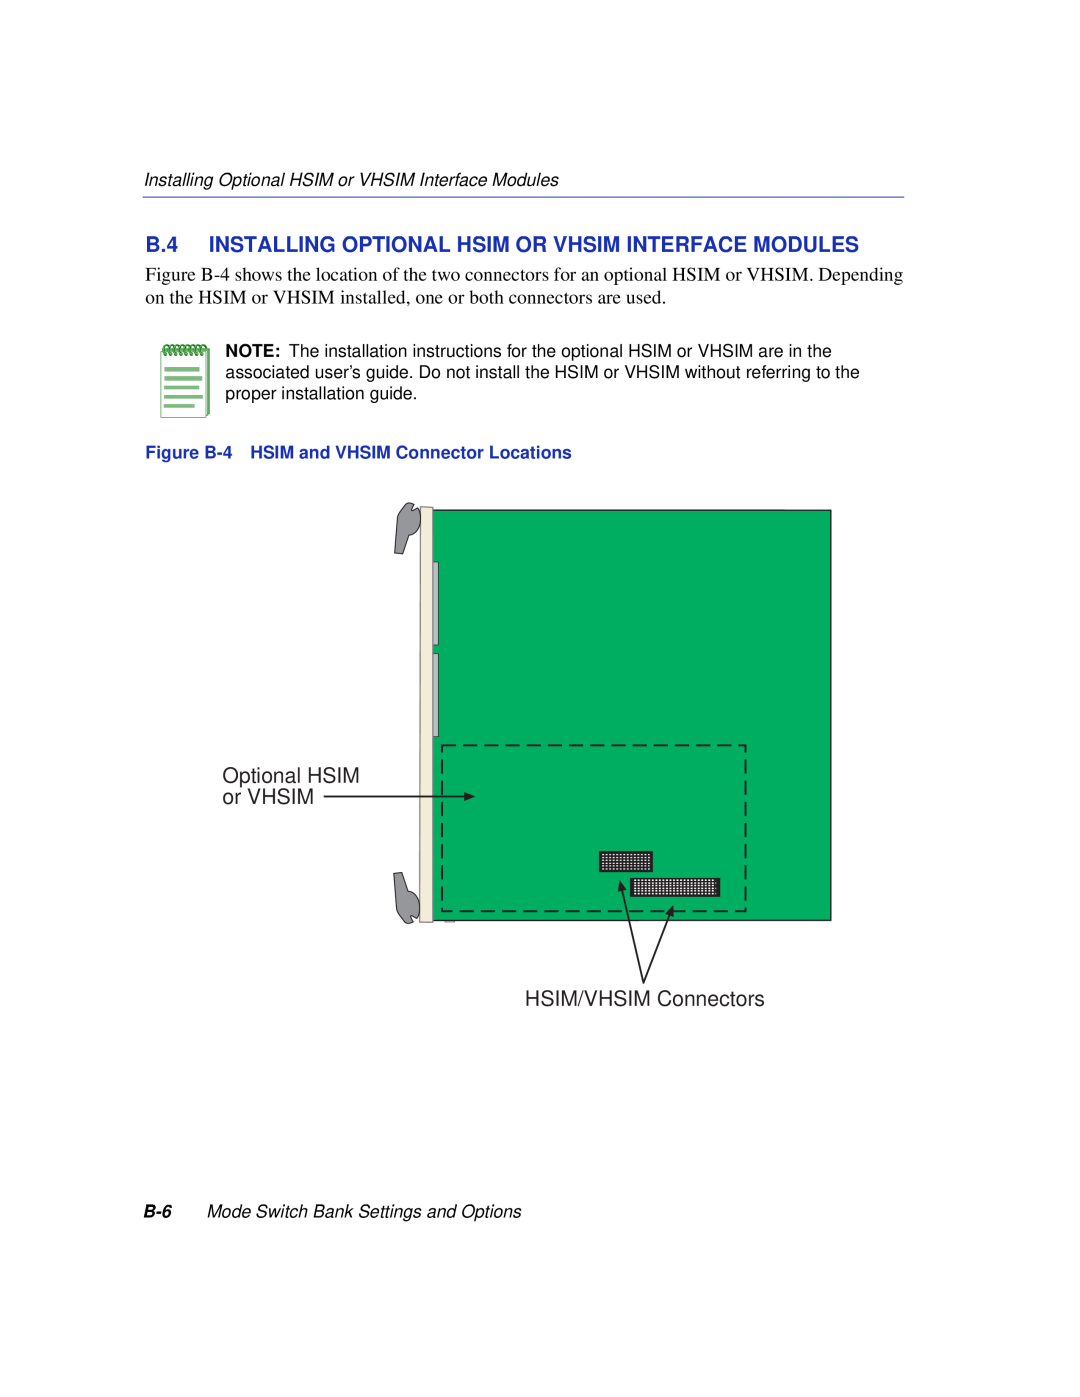 Enterasys Networks 6H352-25 manual B.4 INSTALLING OPTIONAL HSIM OR VHSIM INTERFACE MODULES 